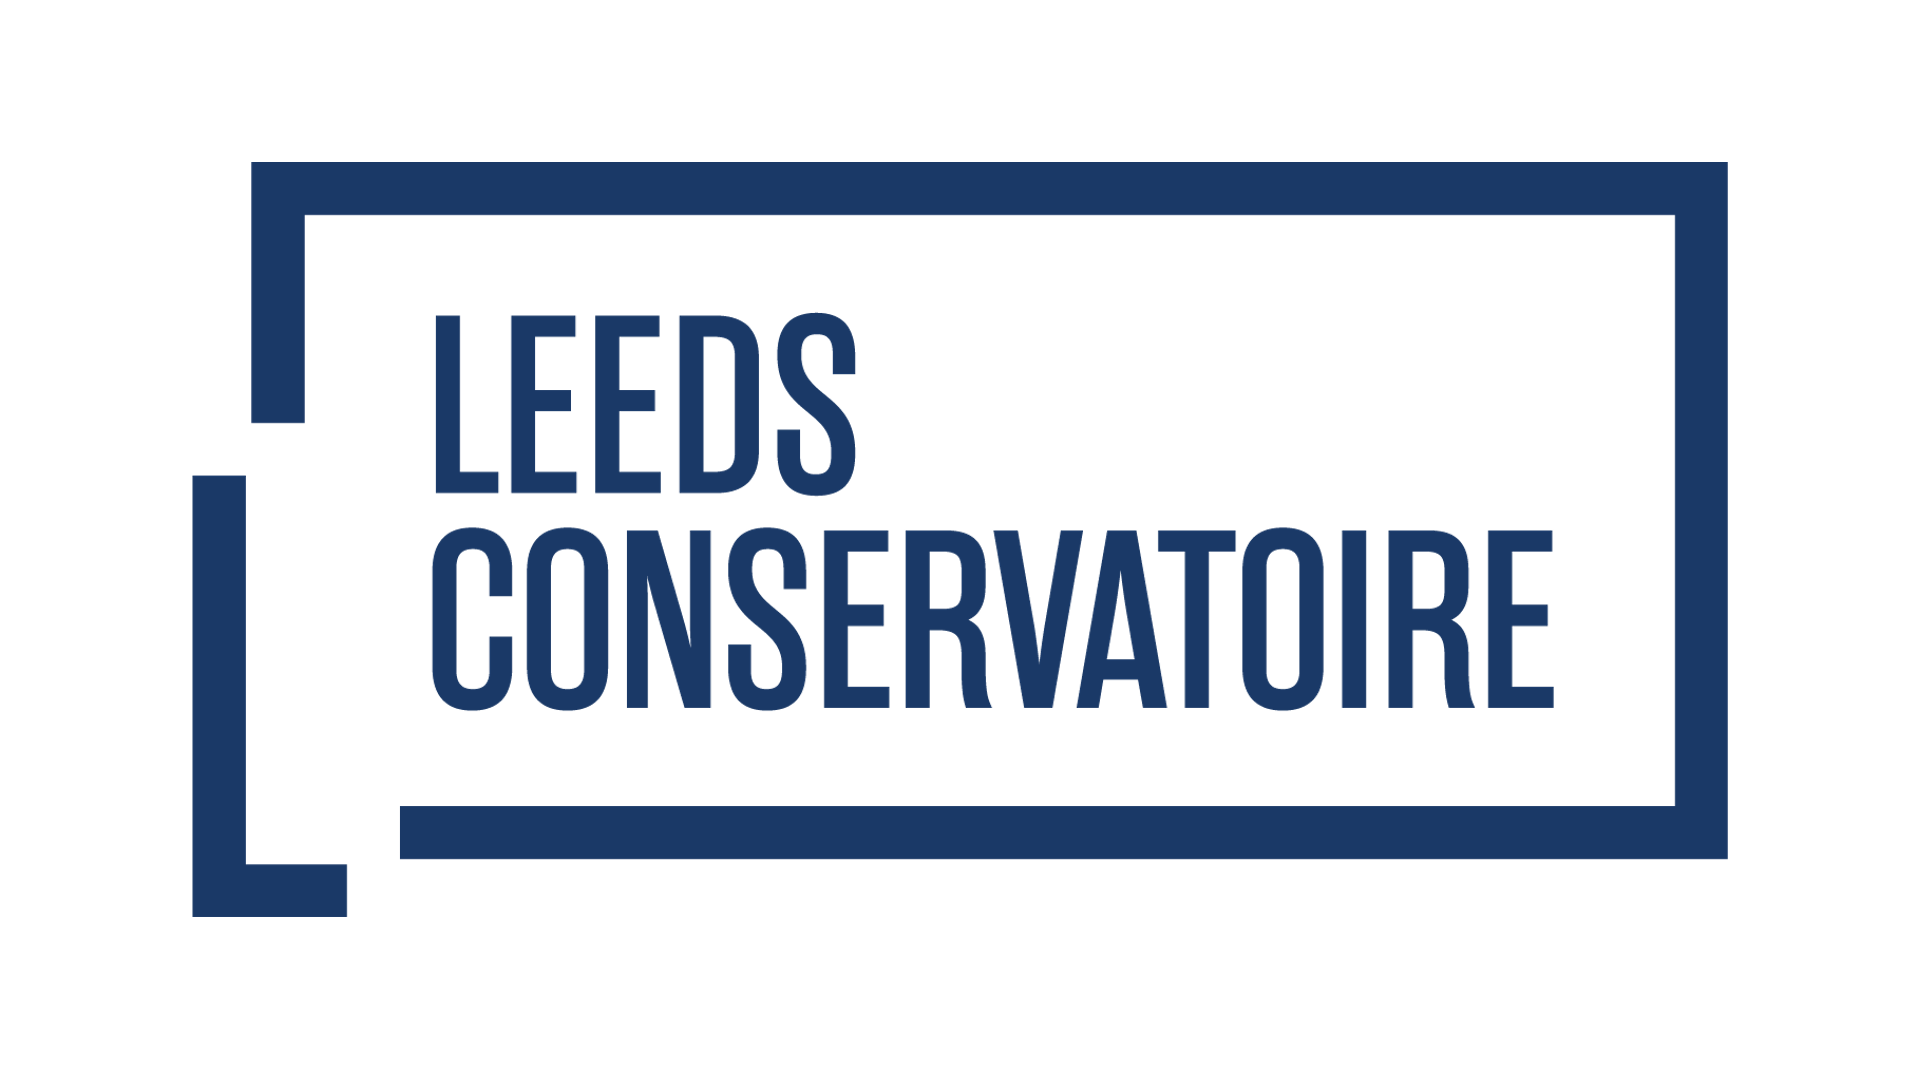 Leeds Conservatoire profile and vacancies